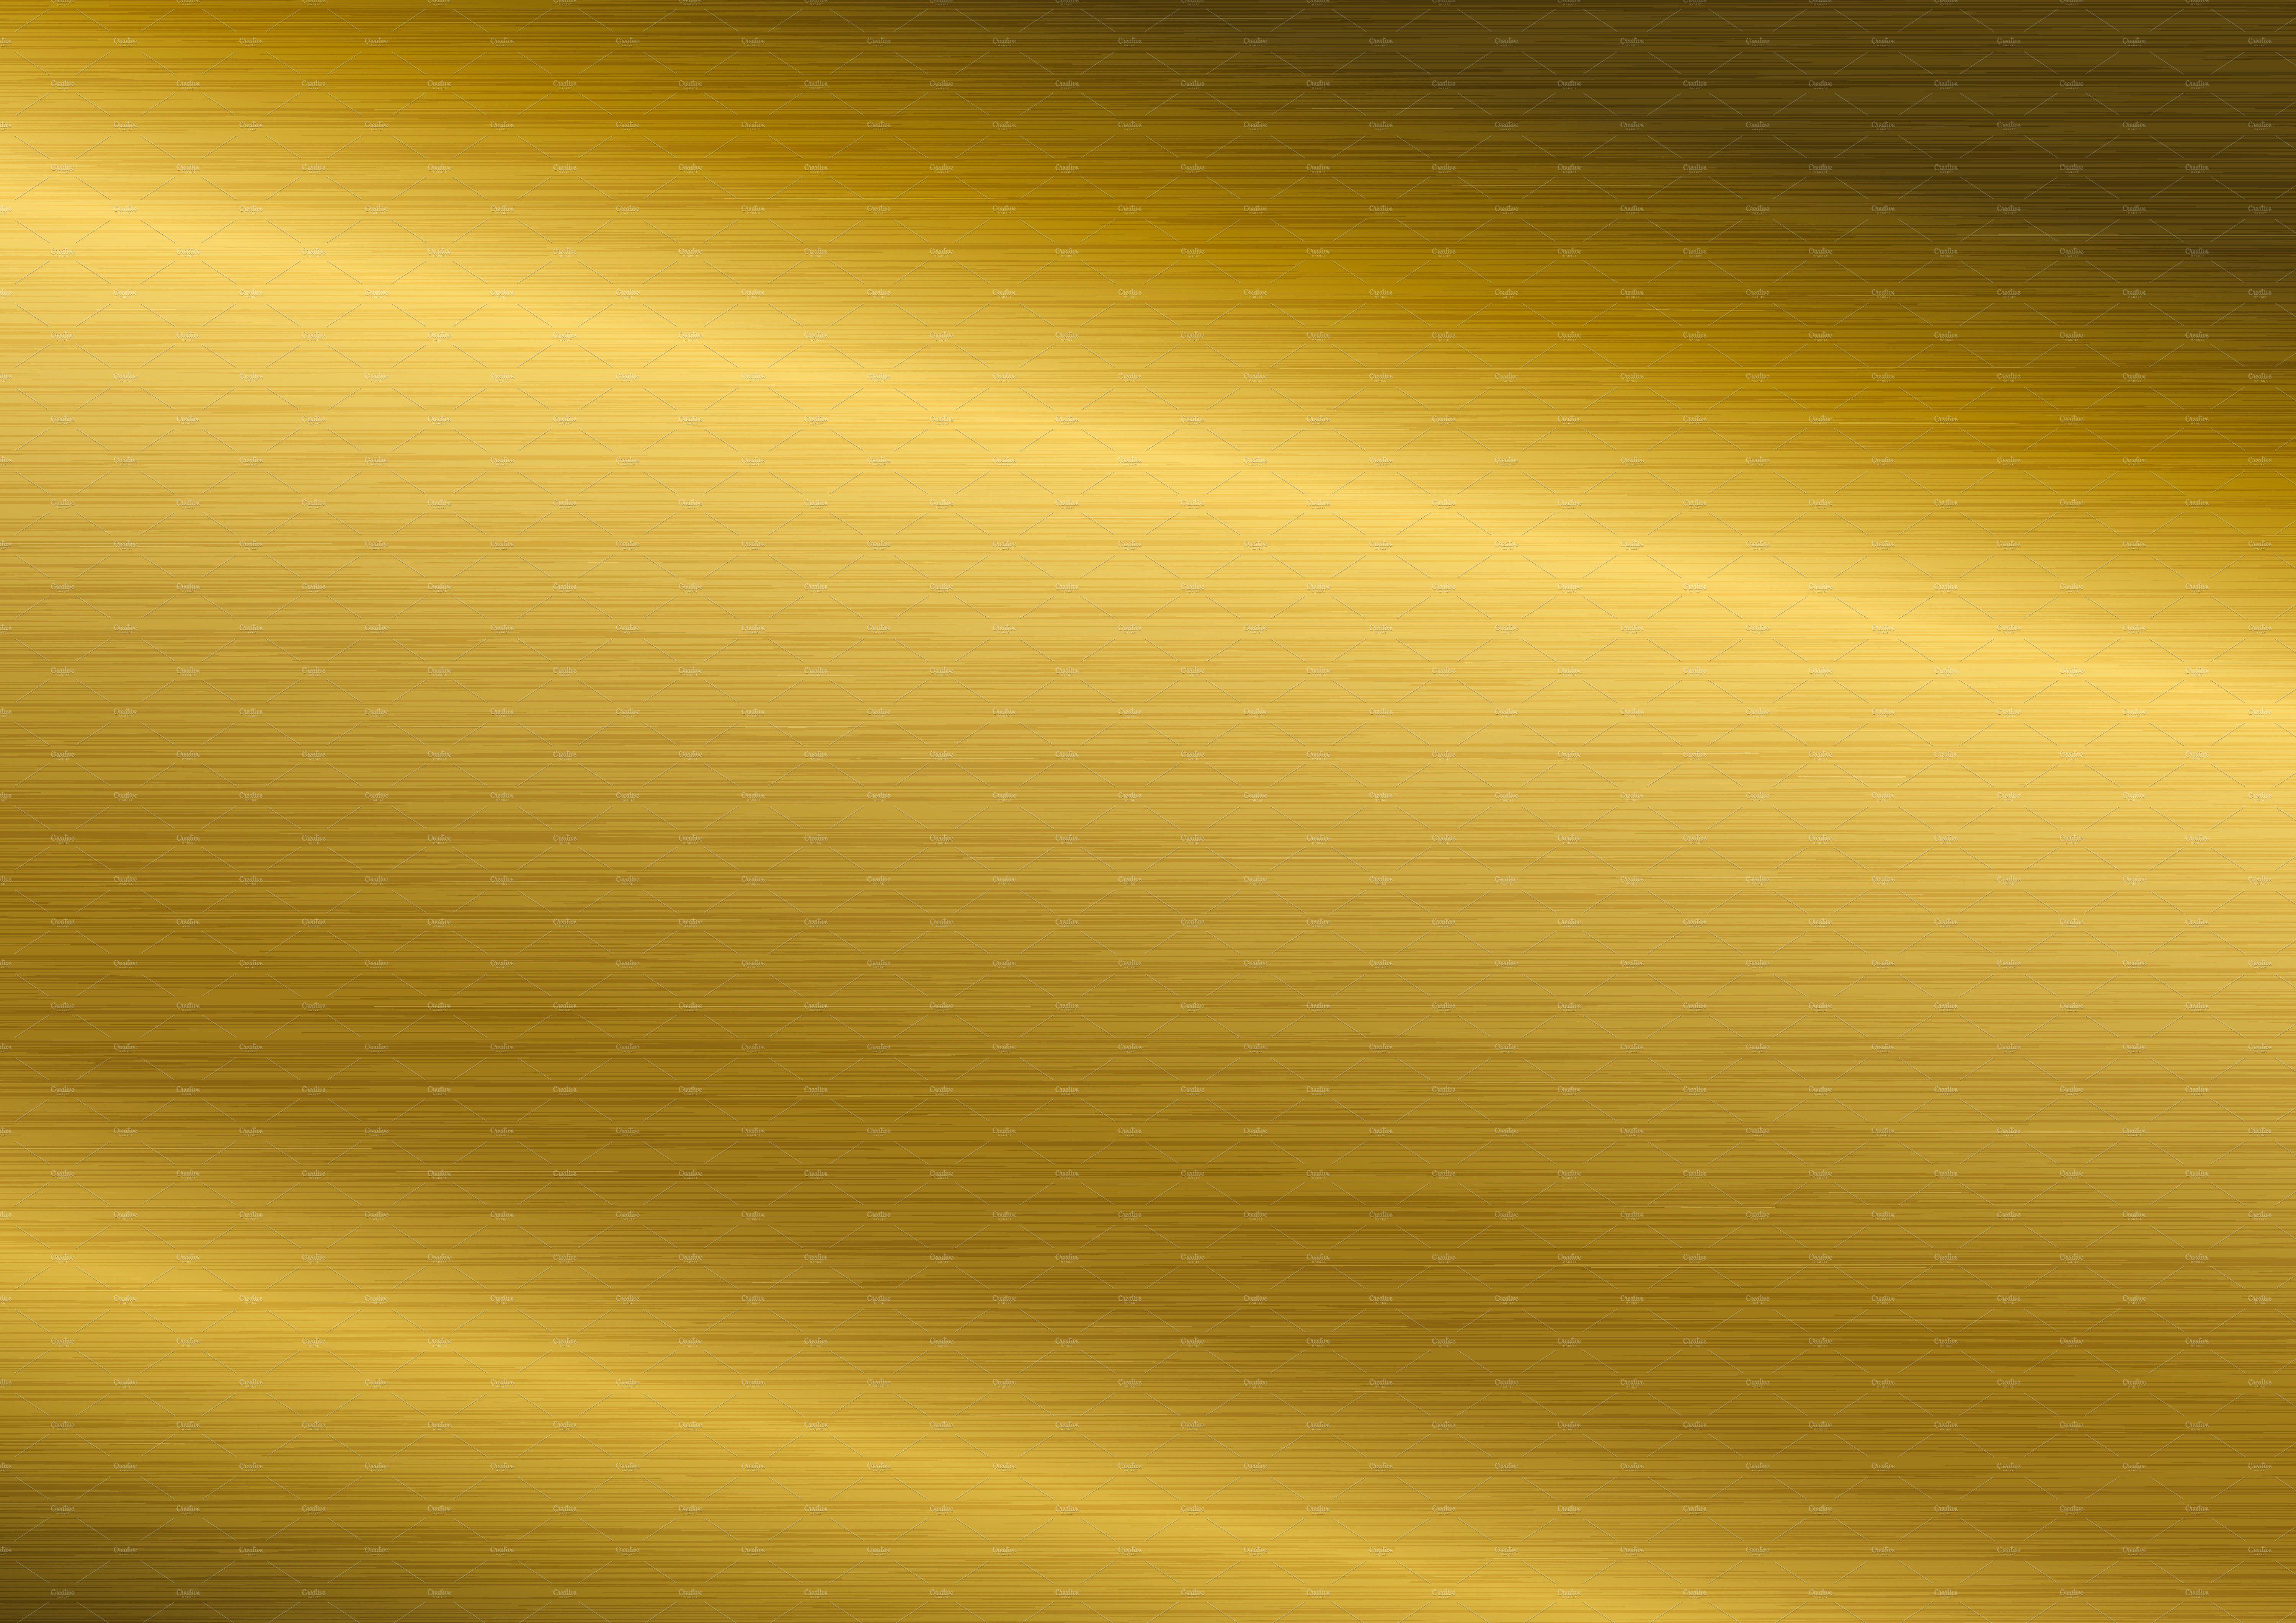 354700 Metallic Gold Background Illustrations RoyaltyFree Vector  Graphics  Clip Art  iStock  Metallic background Gold foil texture  Trophy